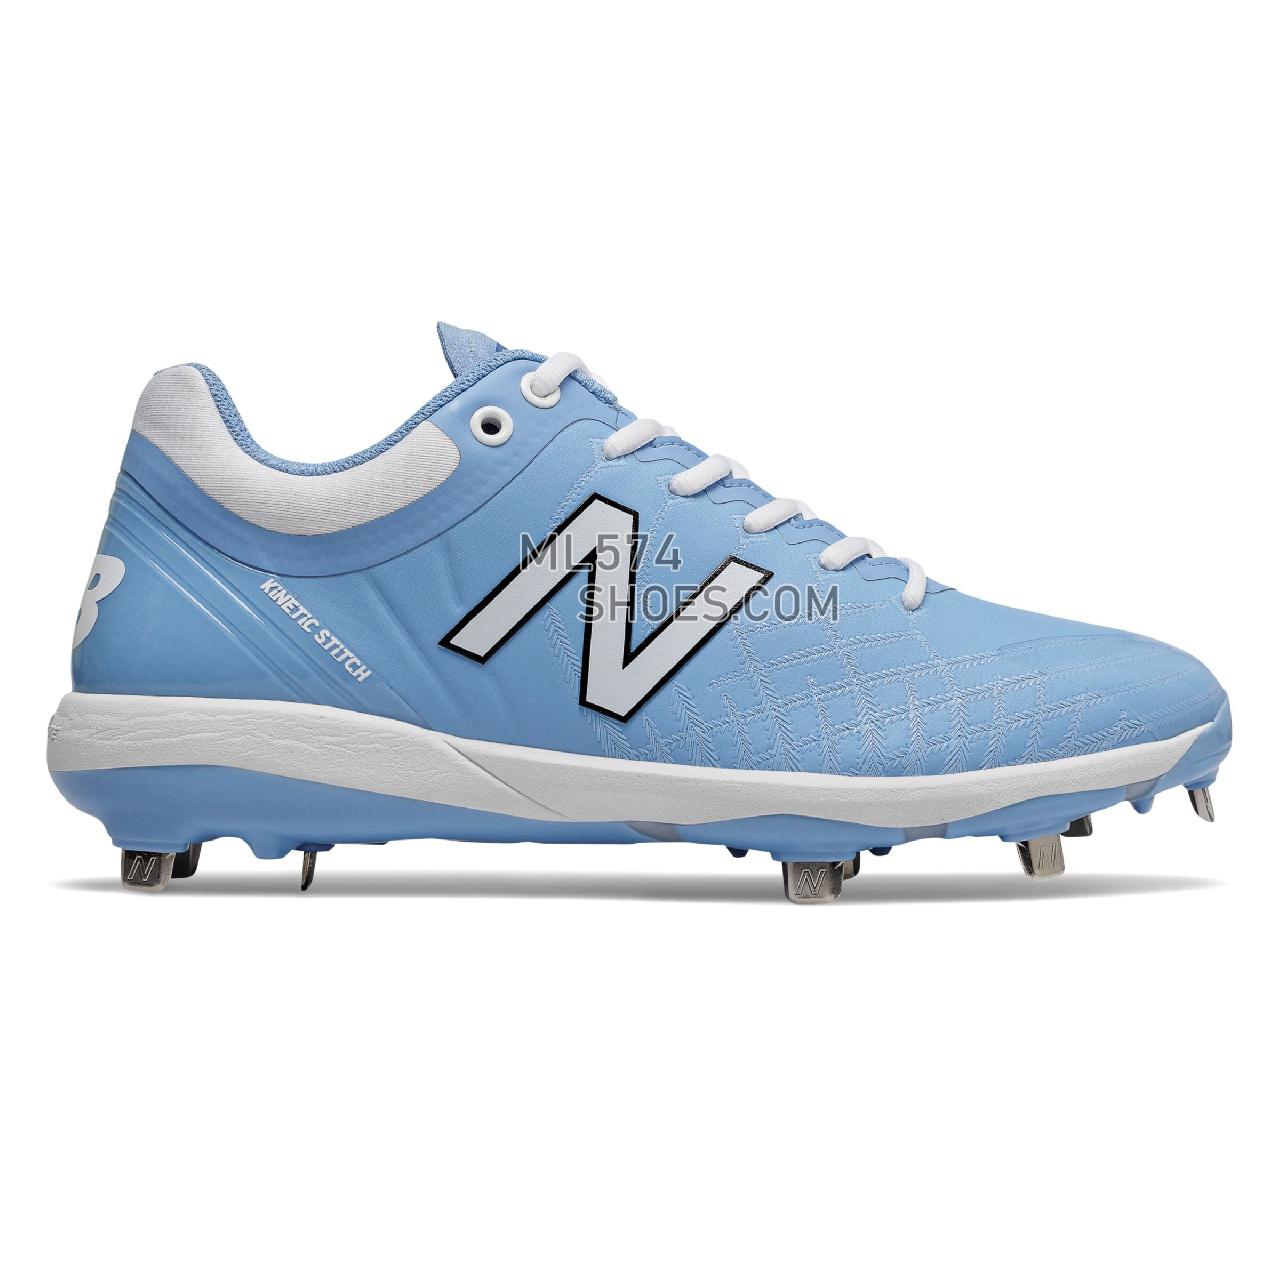 New Balance 4040v5 Metal - Men's Baseball Turf - Baby Blue with White - L4040SD5